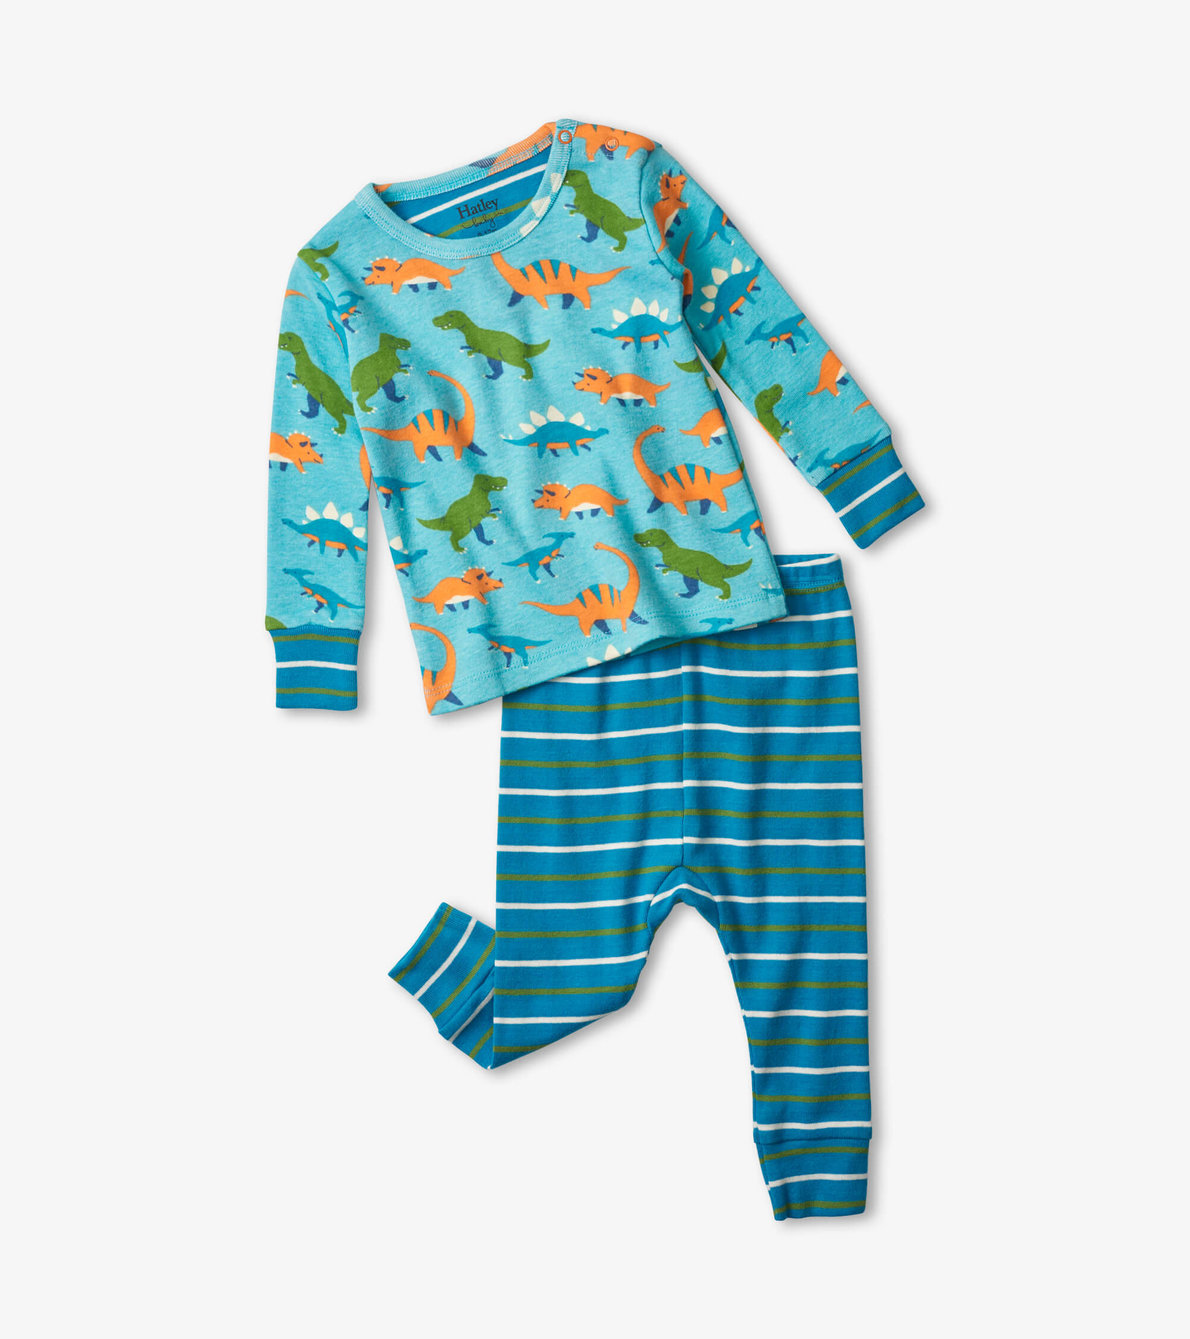 View larger image of Baby Dinos Organic Cotton Baby Pajama Set